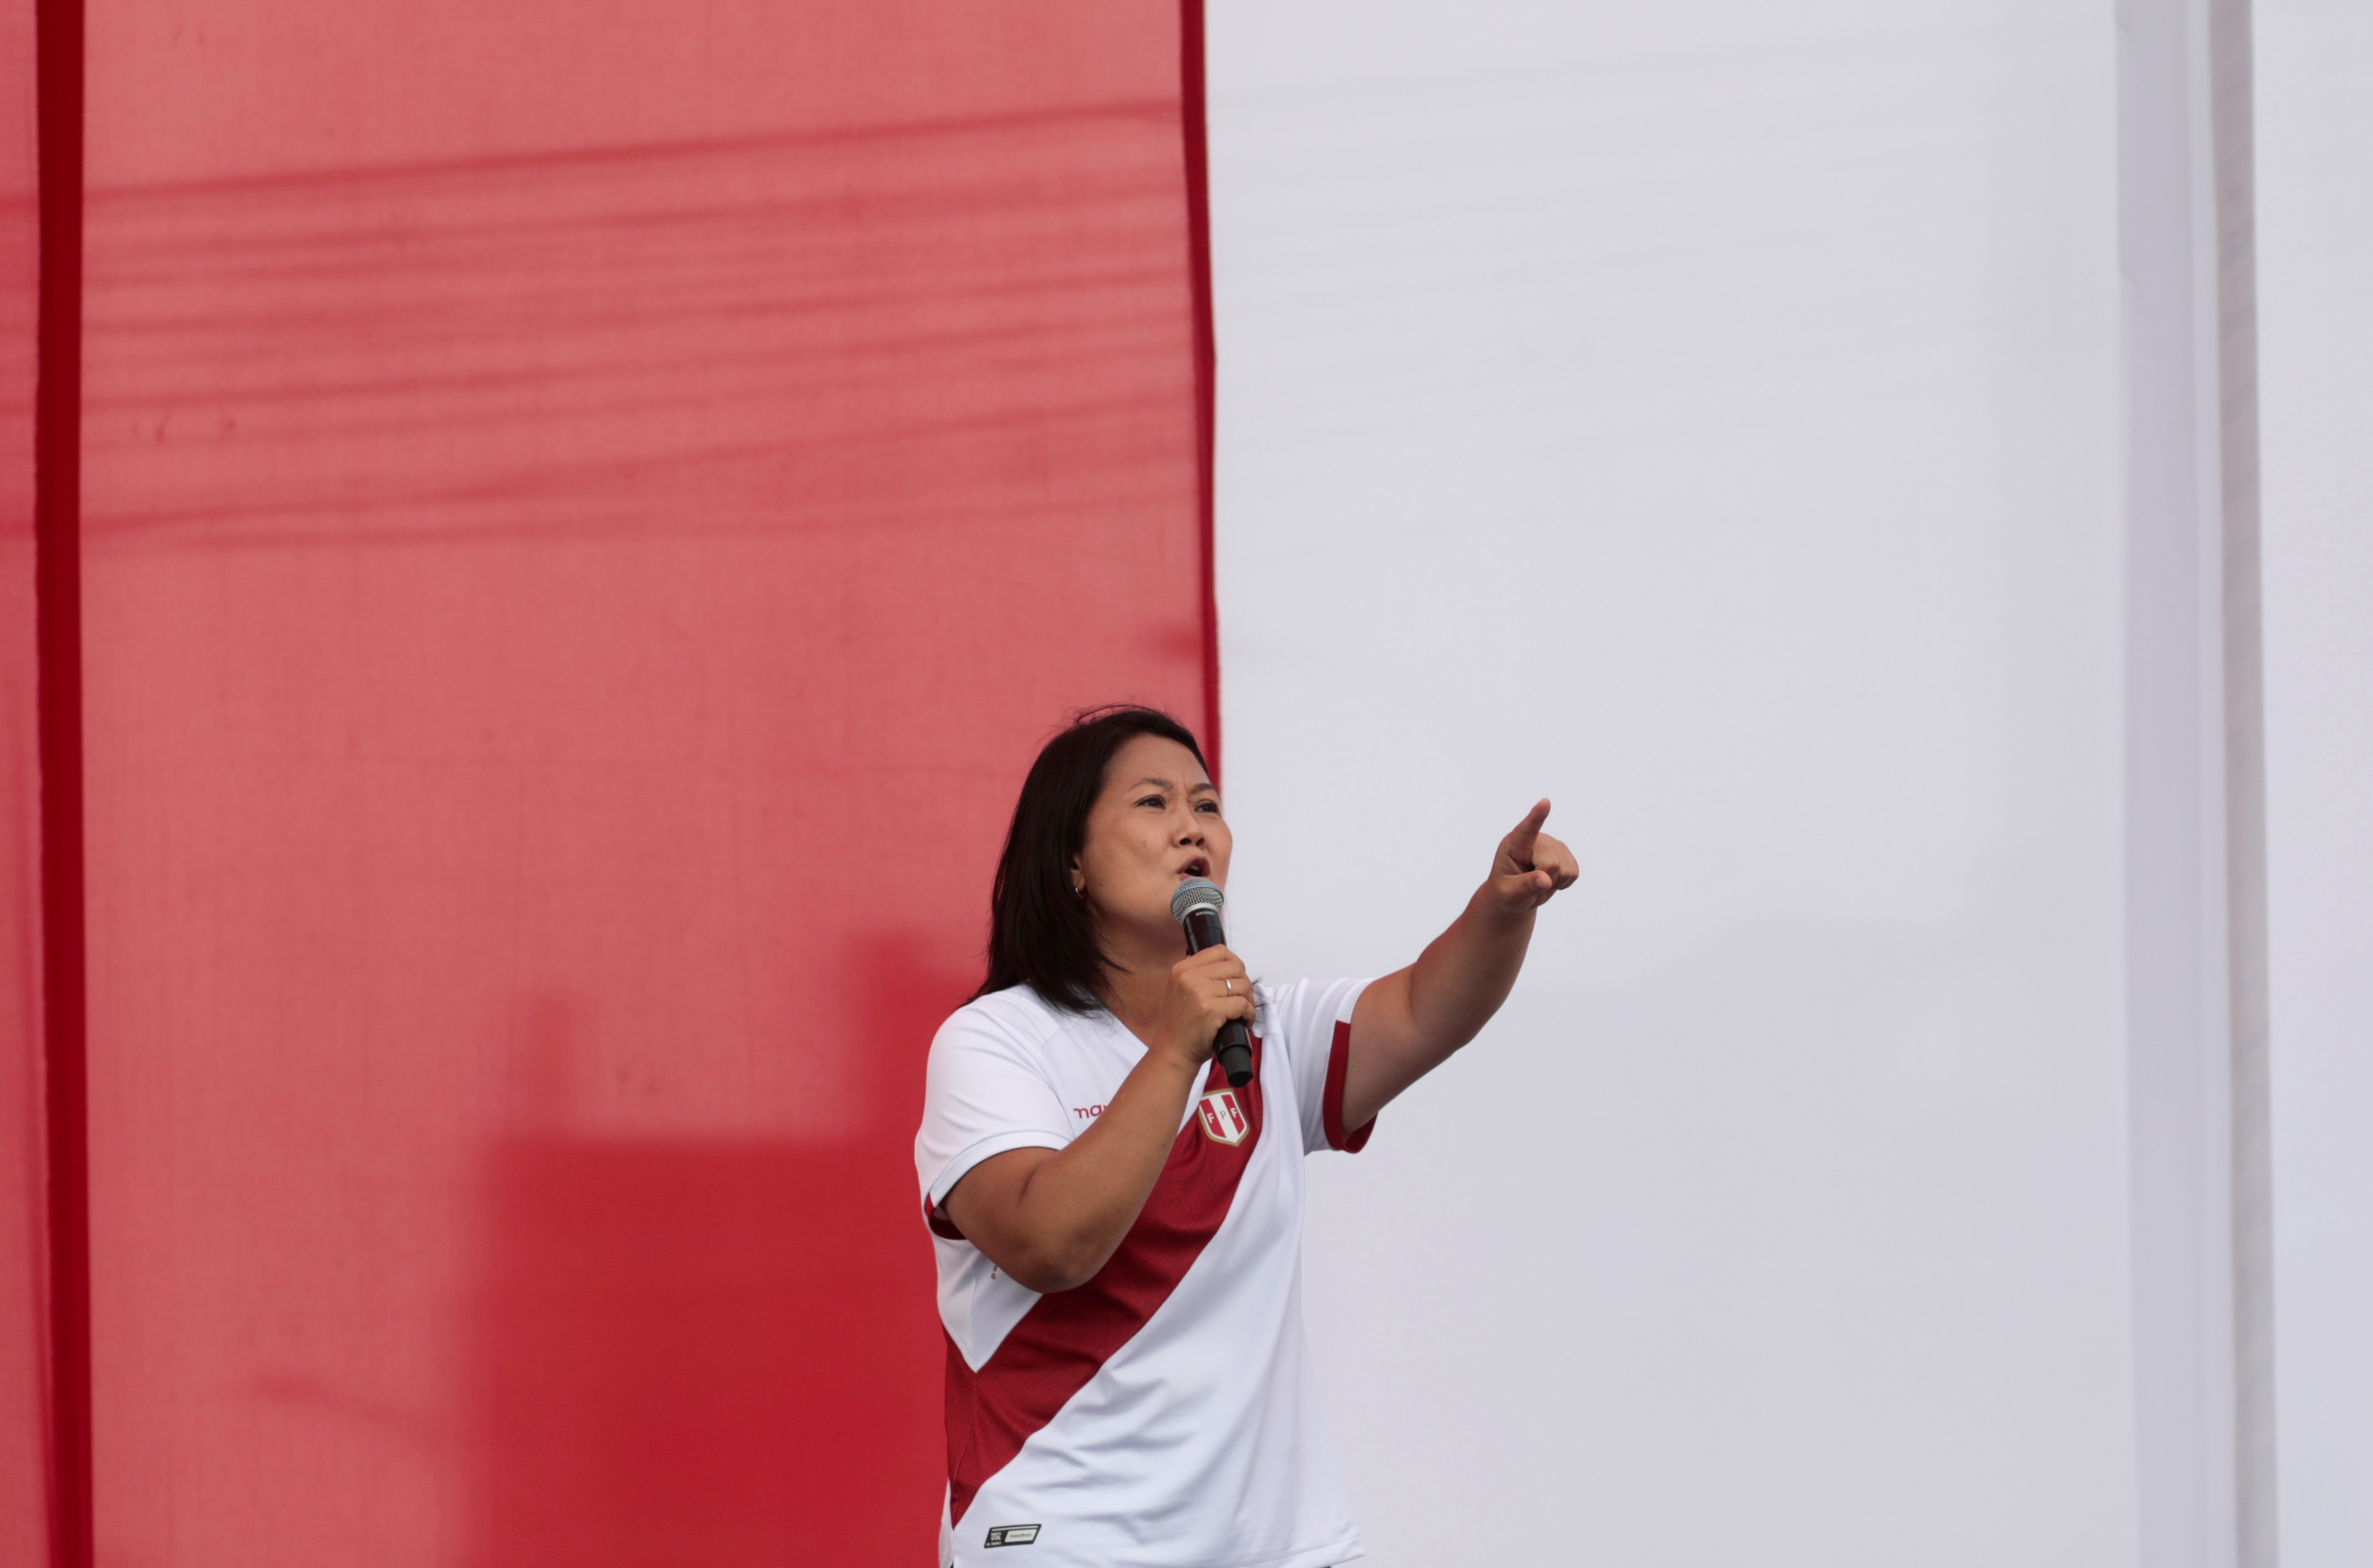 Peru's right-wing candidate Keiko Fujimori, who will face opponent socialist candidate Pedro Castillo in a run-off vote on June 6, addresses supporters in Lima, Peru May 15, 2021. REUTERS/Alessandro Cinque/File Photo